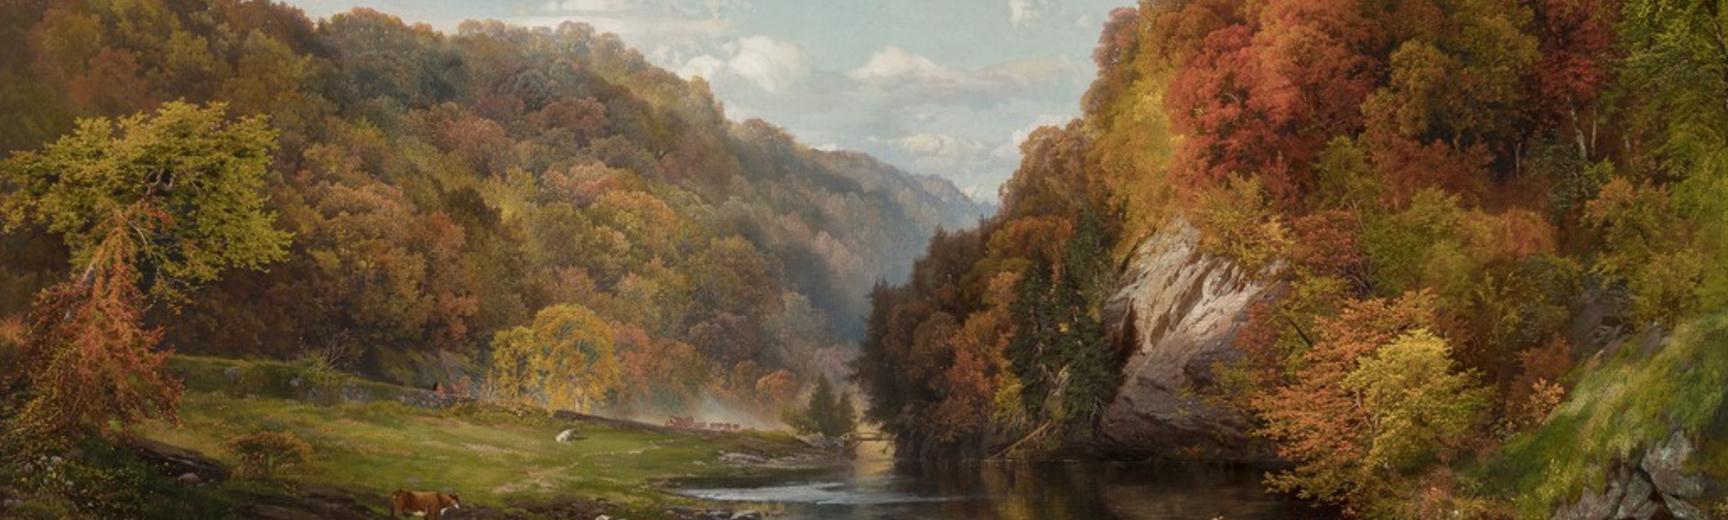 Thomas Moran, Autumn Landscape, the Wissahickon, 1864 – On loan from the Terra Foundation